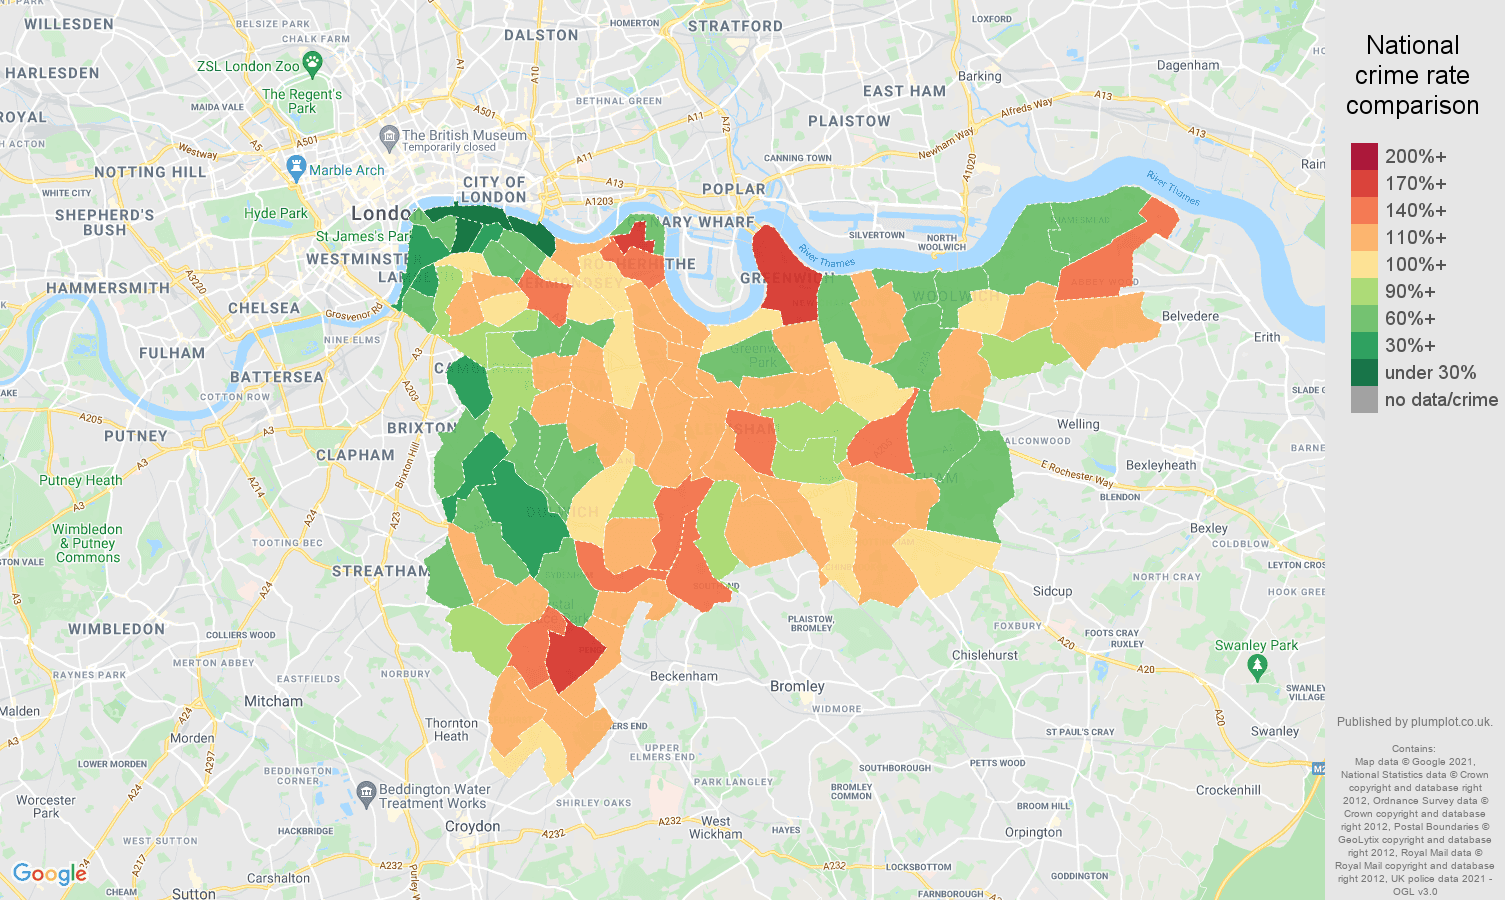 South East London criminal damage and arson crime rate comparison map